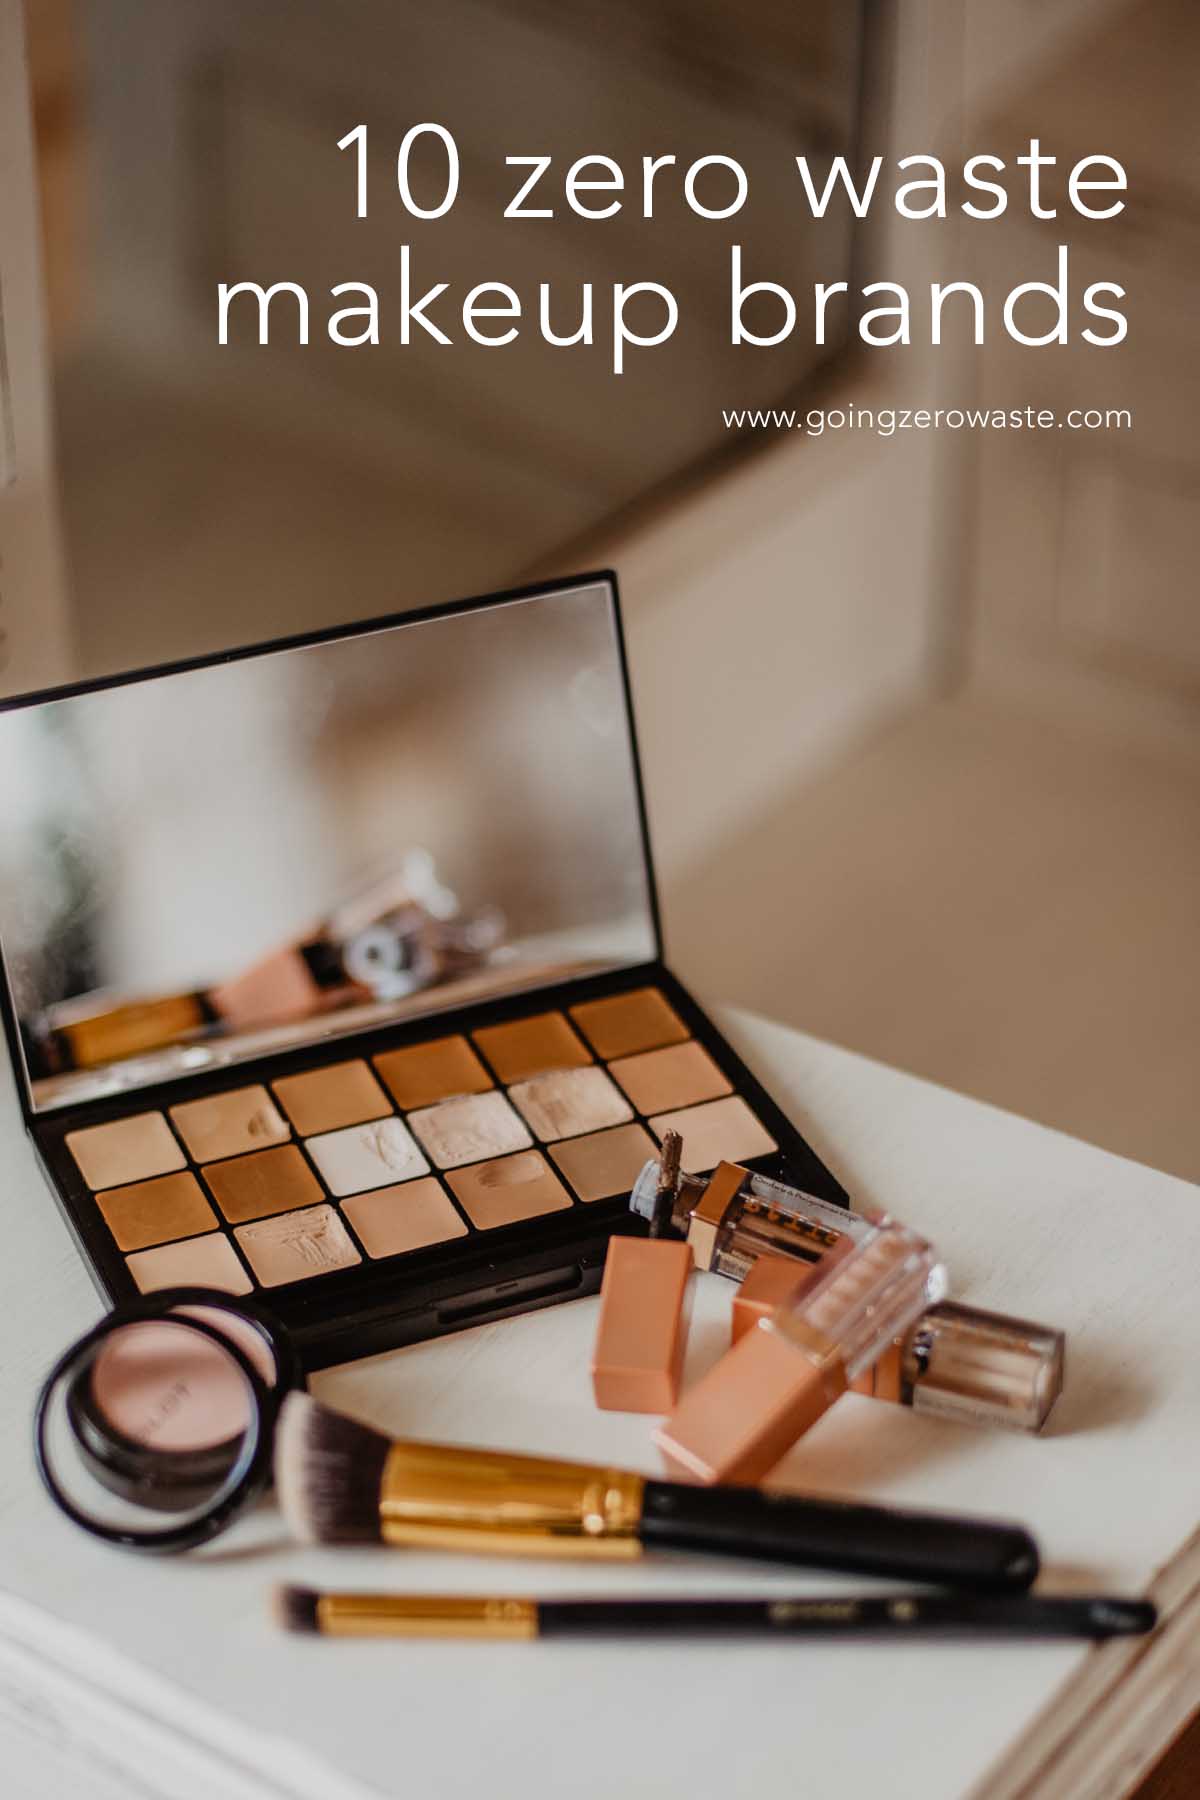 Zero Waste Makeup Brands - Going Zero Waste